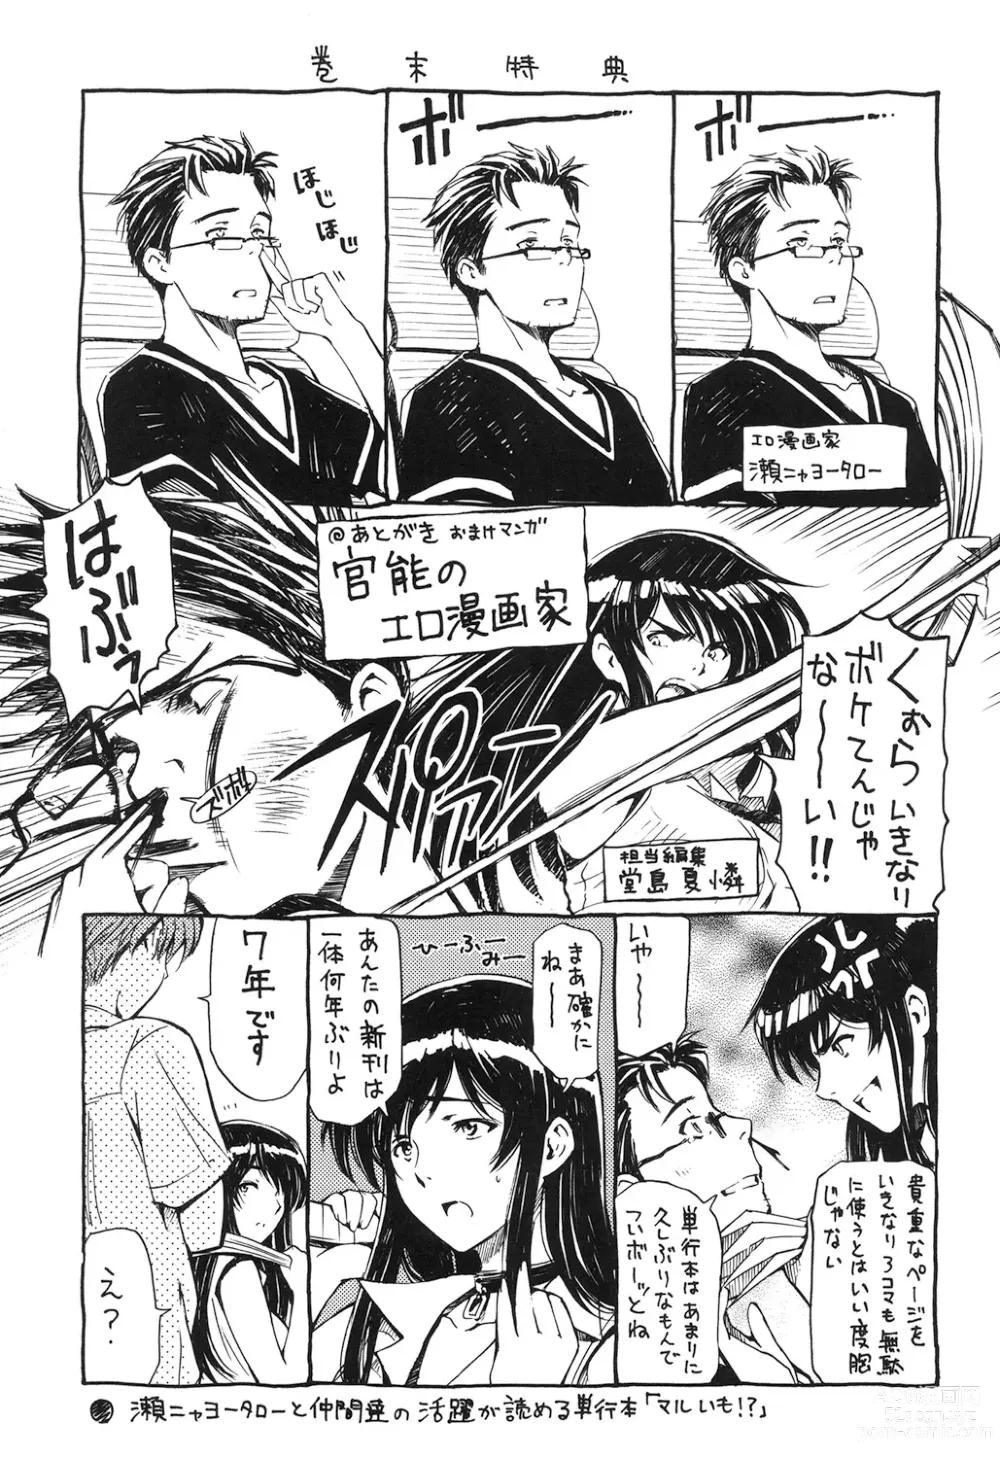 Page 251 of manga Kannou no Houteishiki